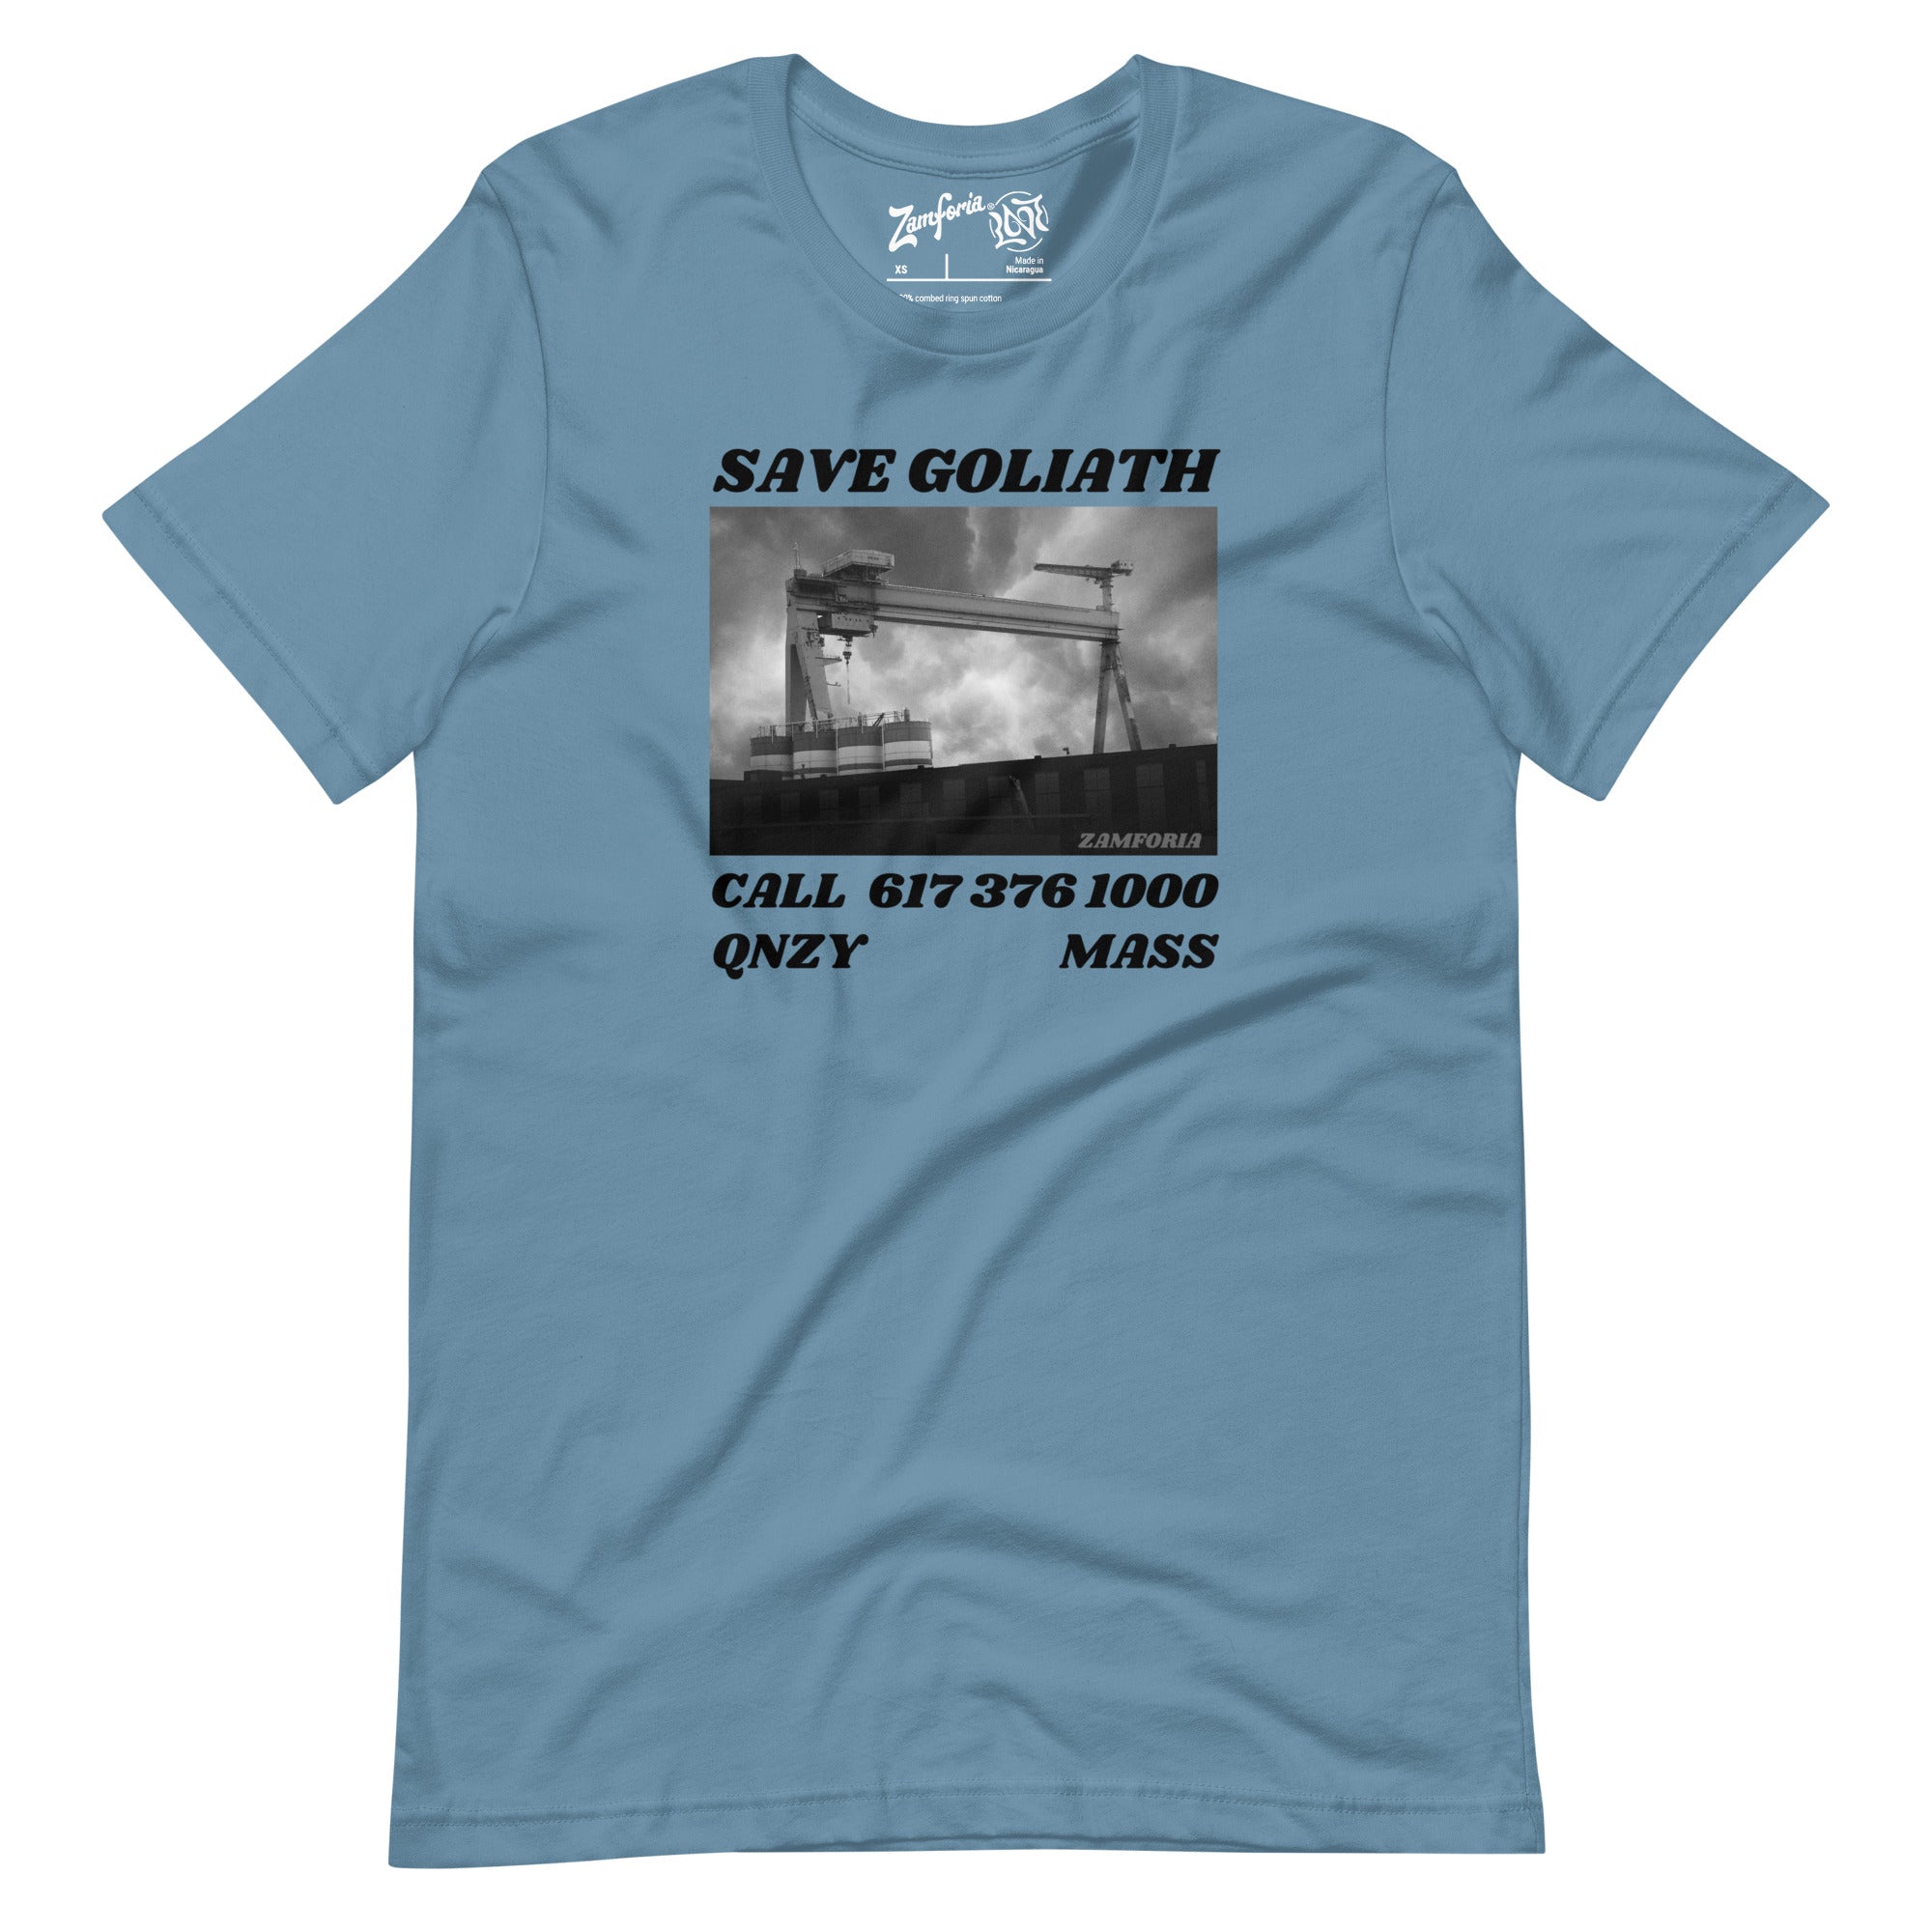 QNZY's "Save Goliath"